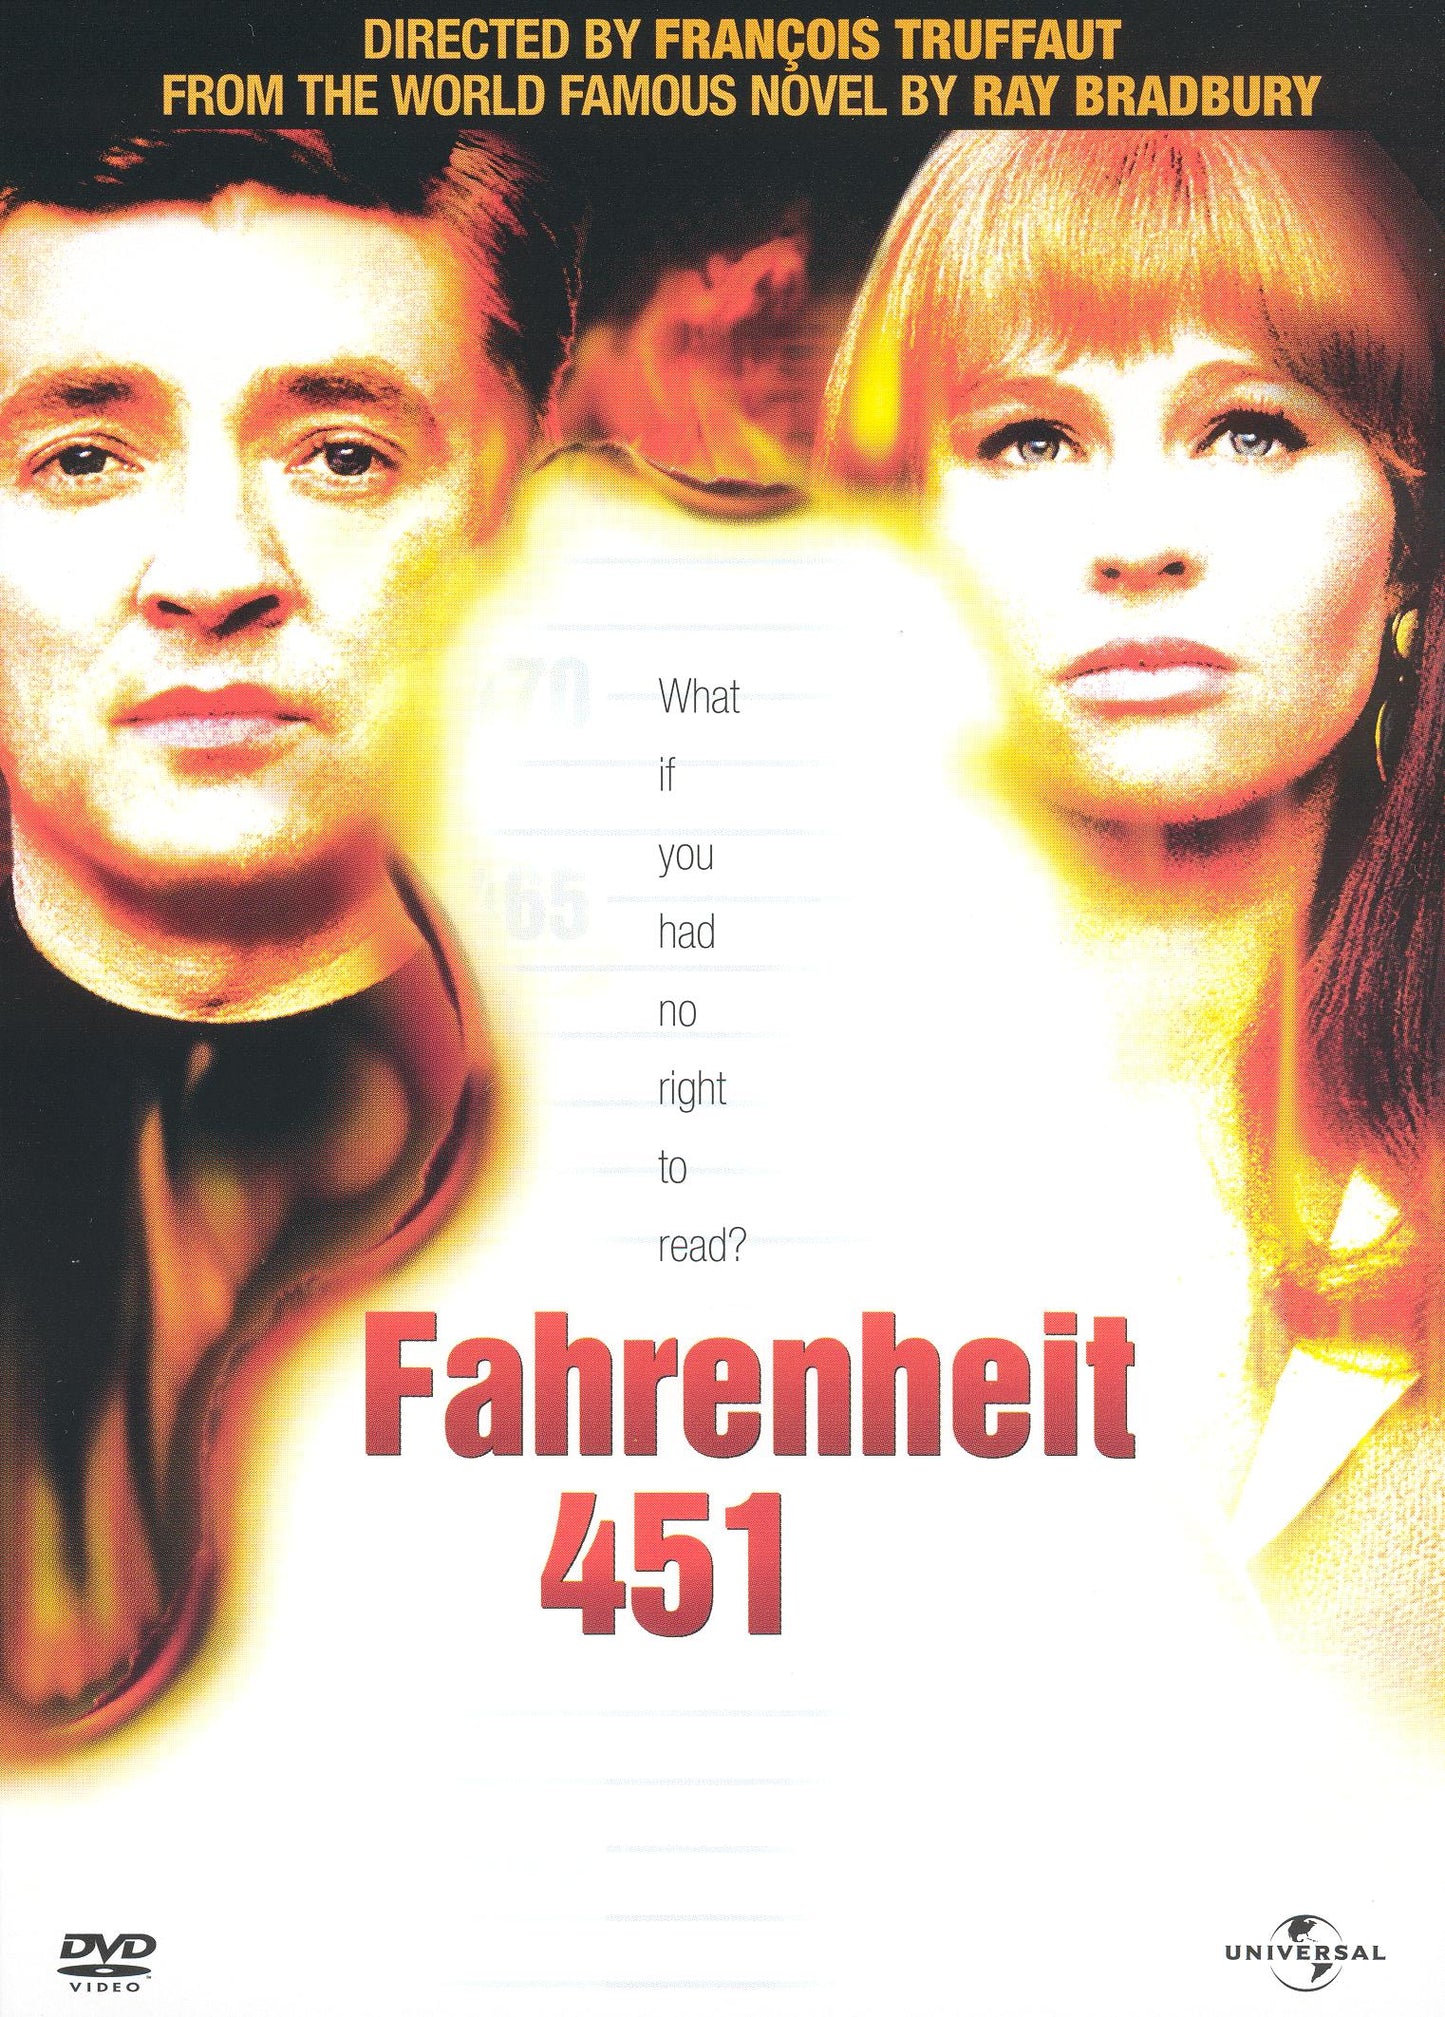 Fahrenheit 451 cover art